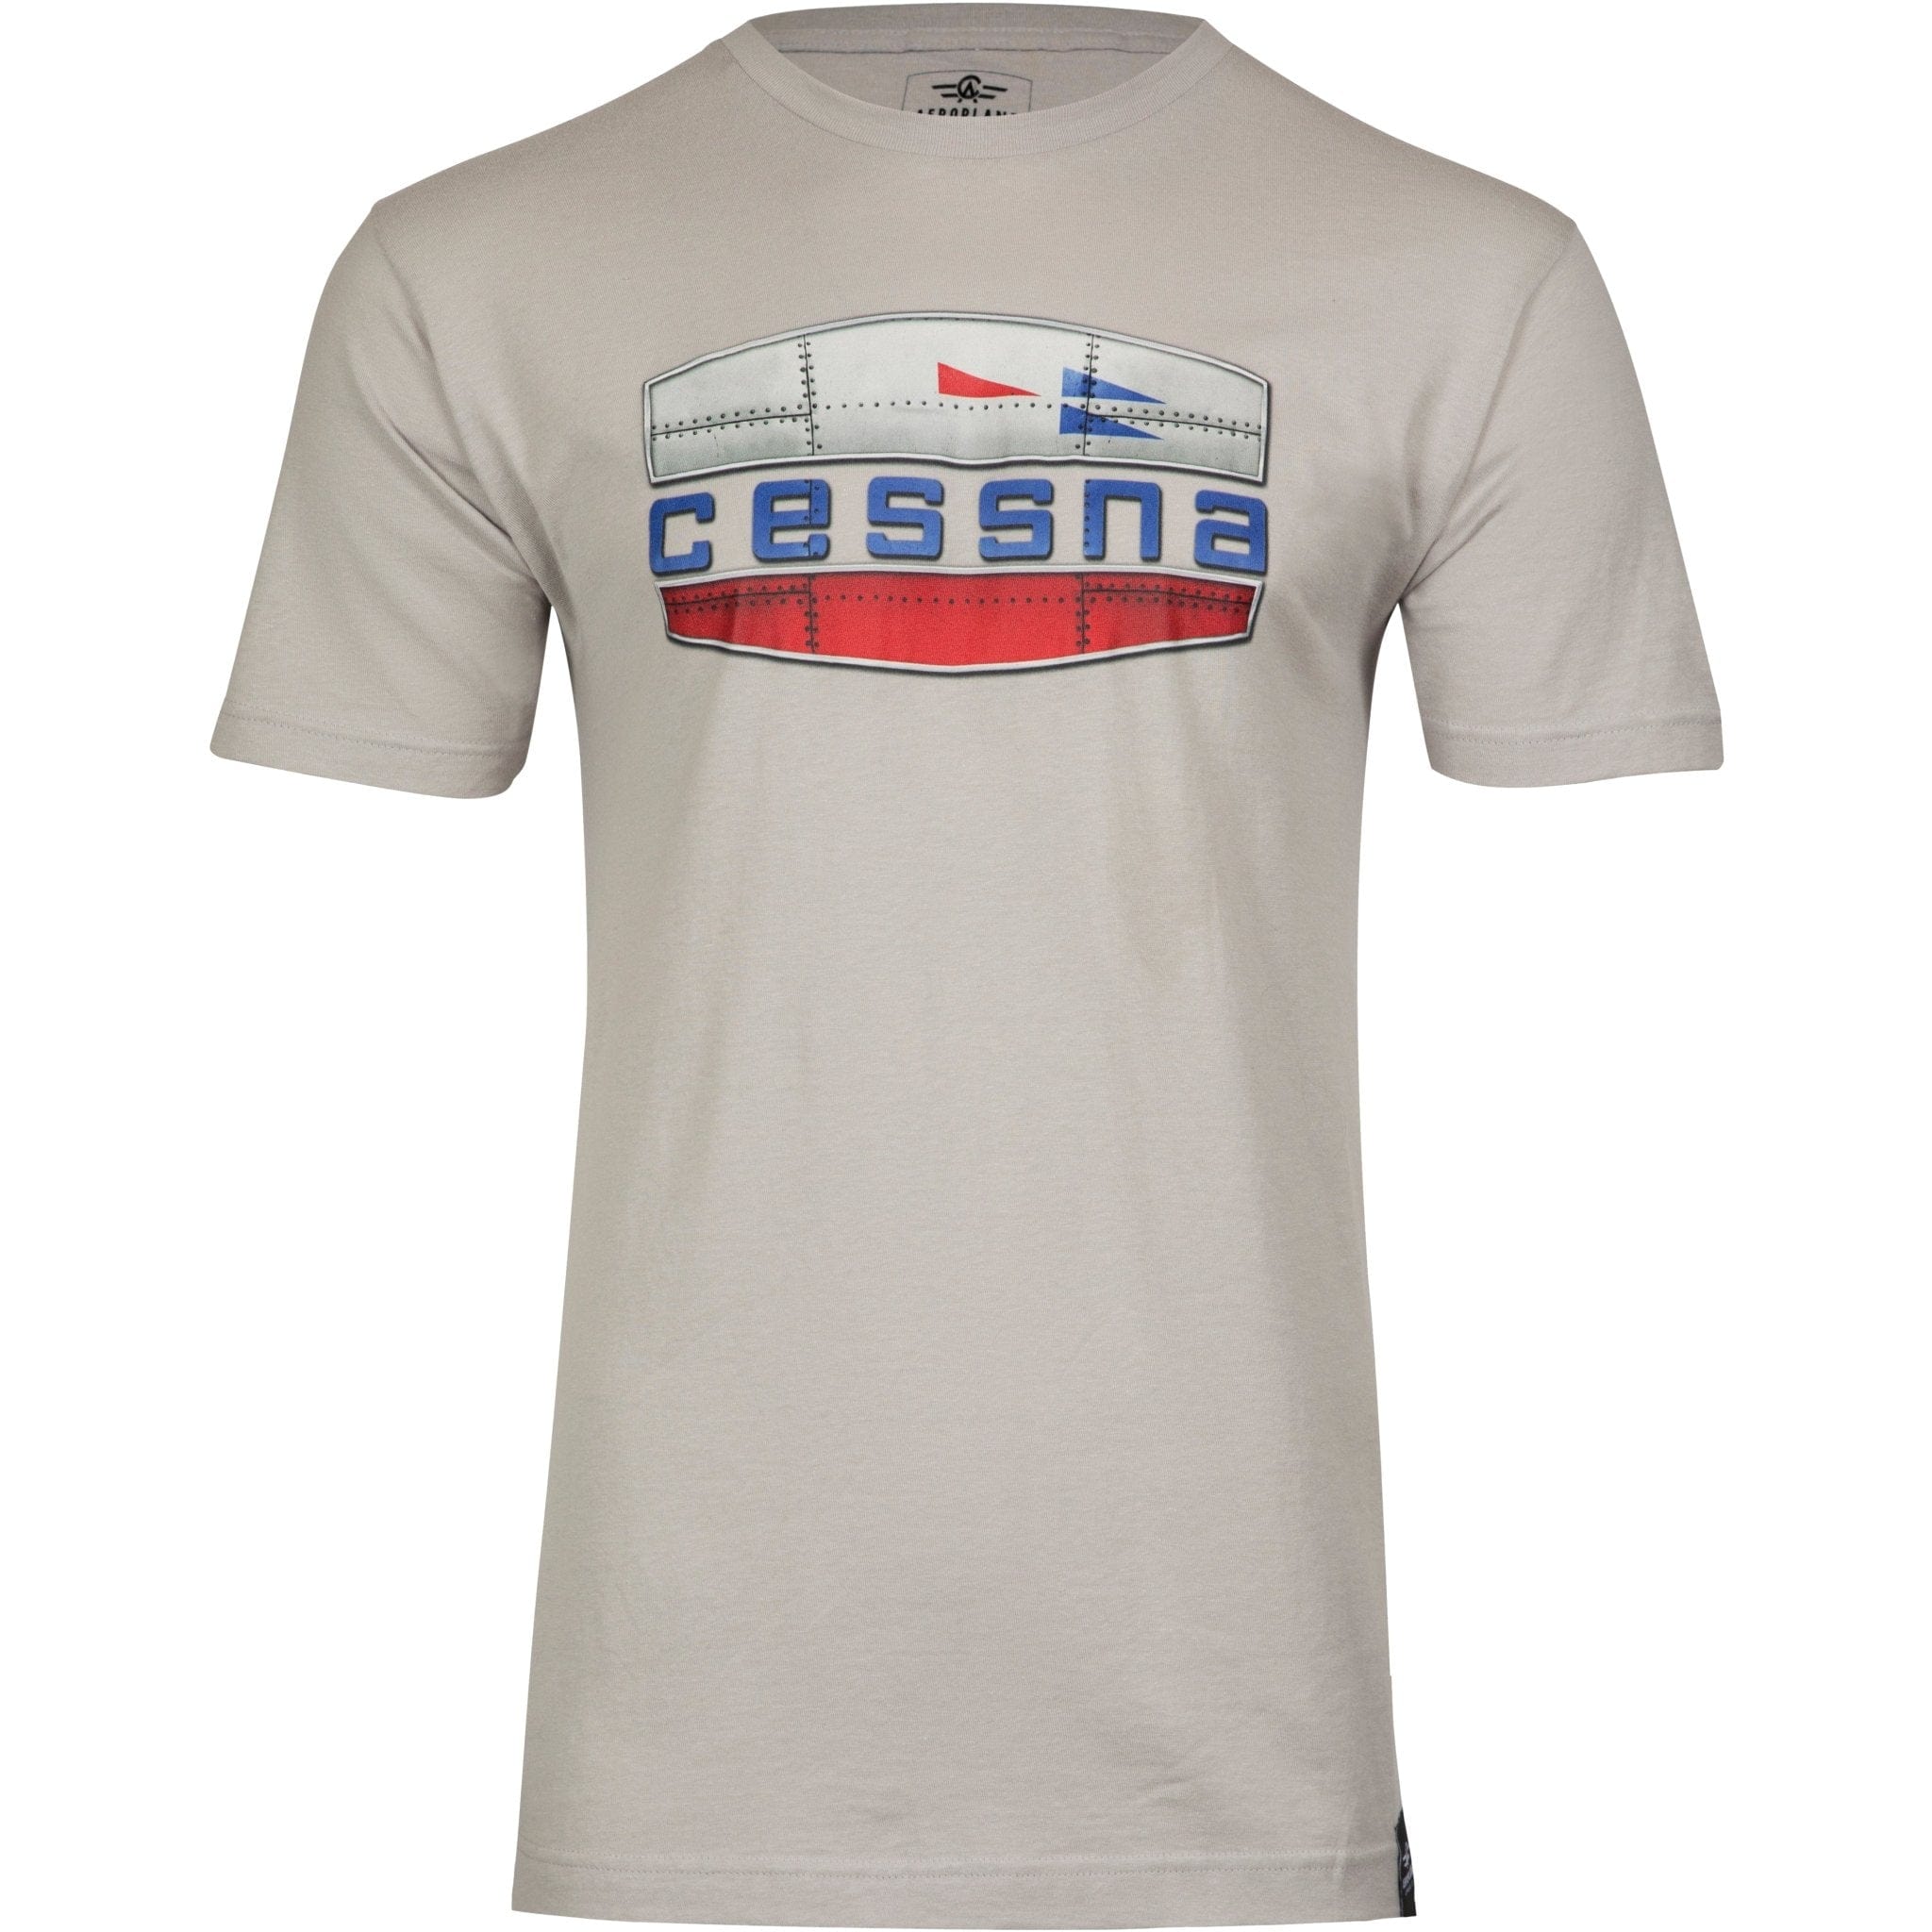 Cessna 70's Vintage Logo Officially Licensed T-Shirt